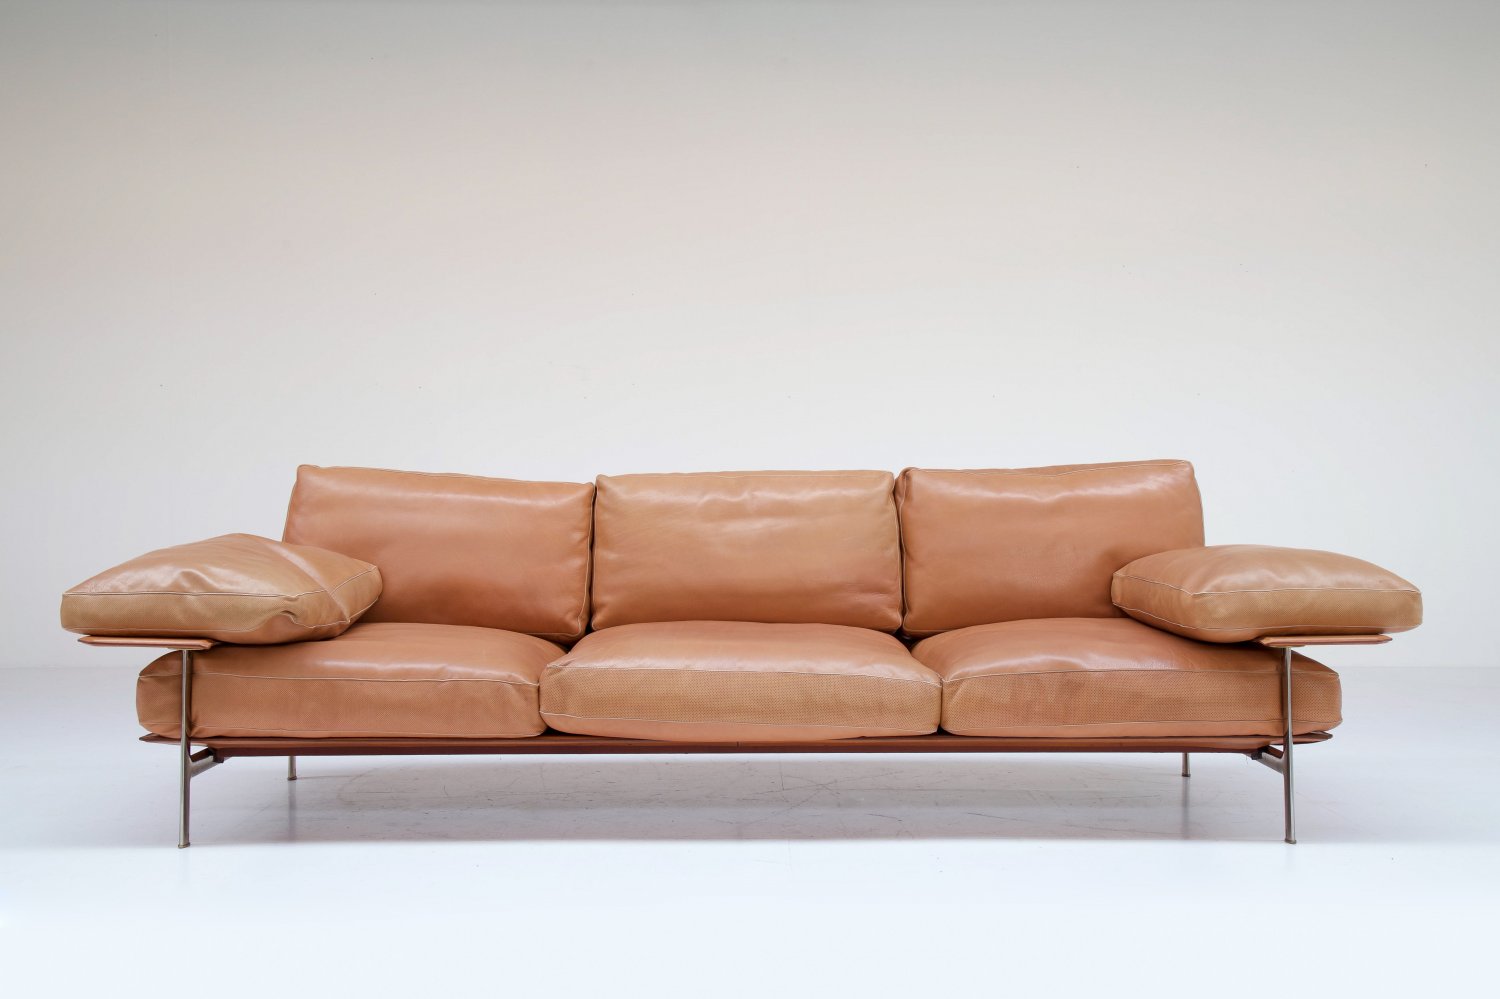 'Diesis' three seater sofa